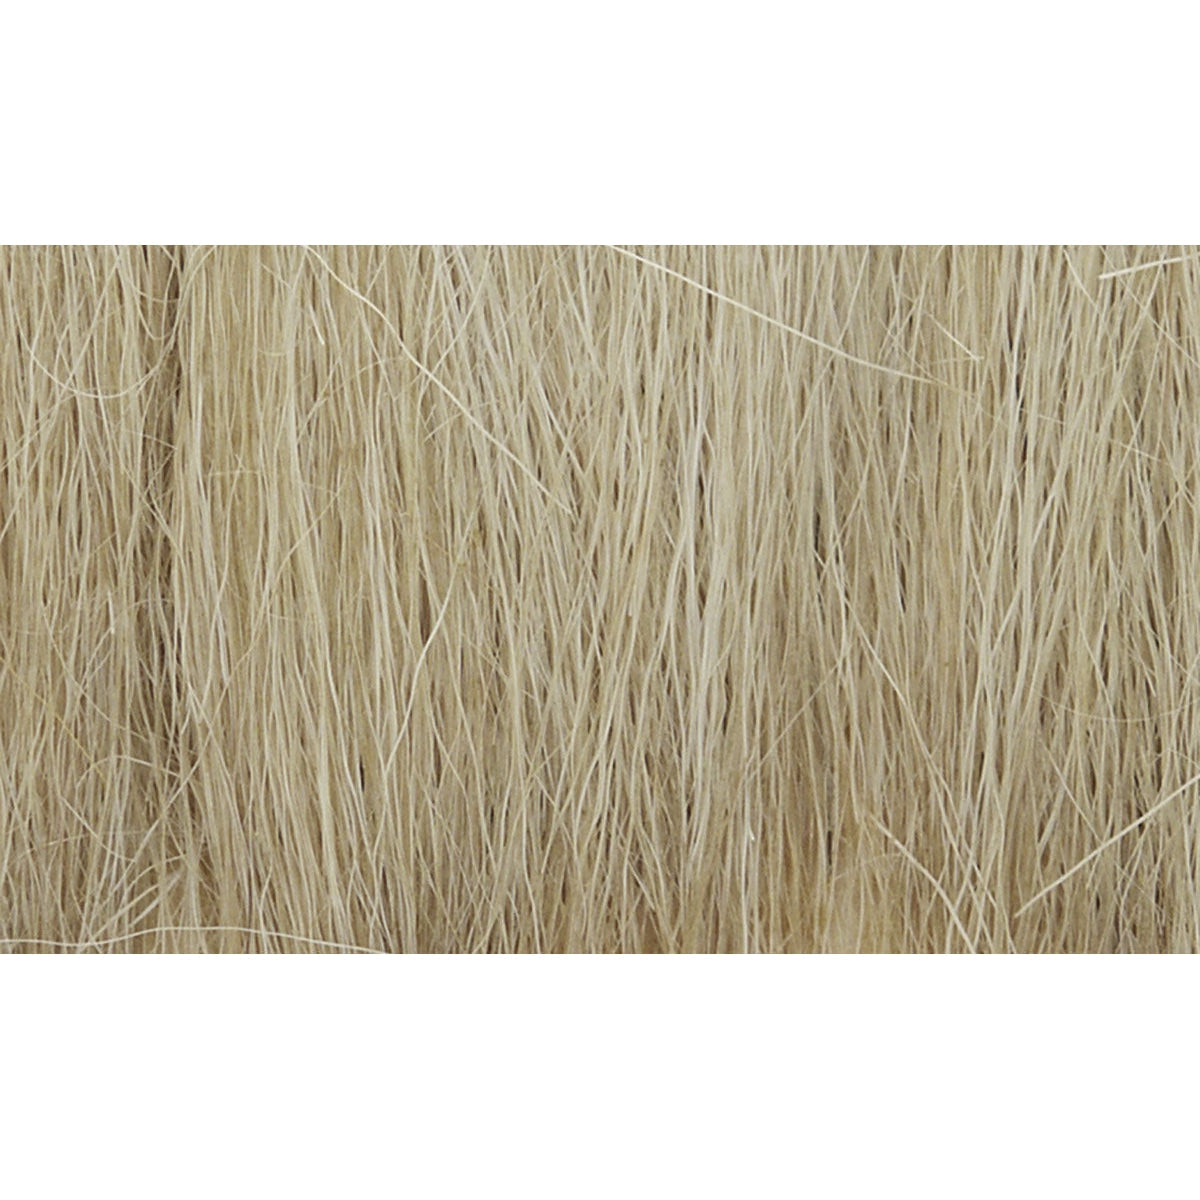 Woodland Scenics Field Grass/Natural Straw Model Parts Warehouse